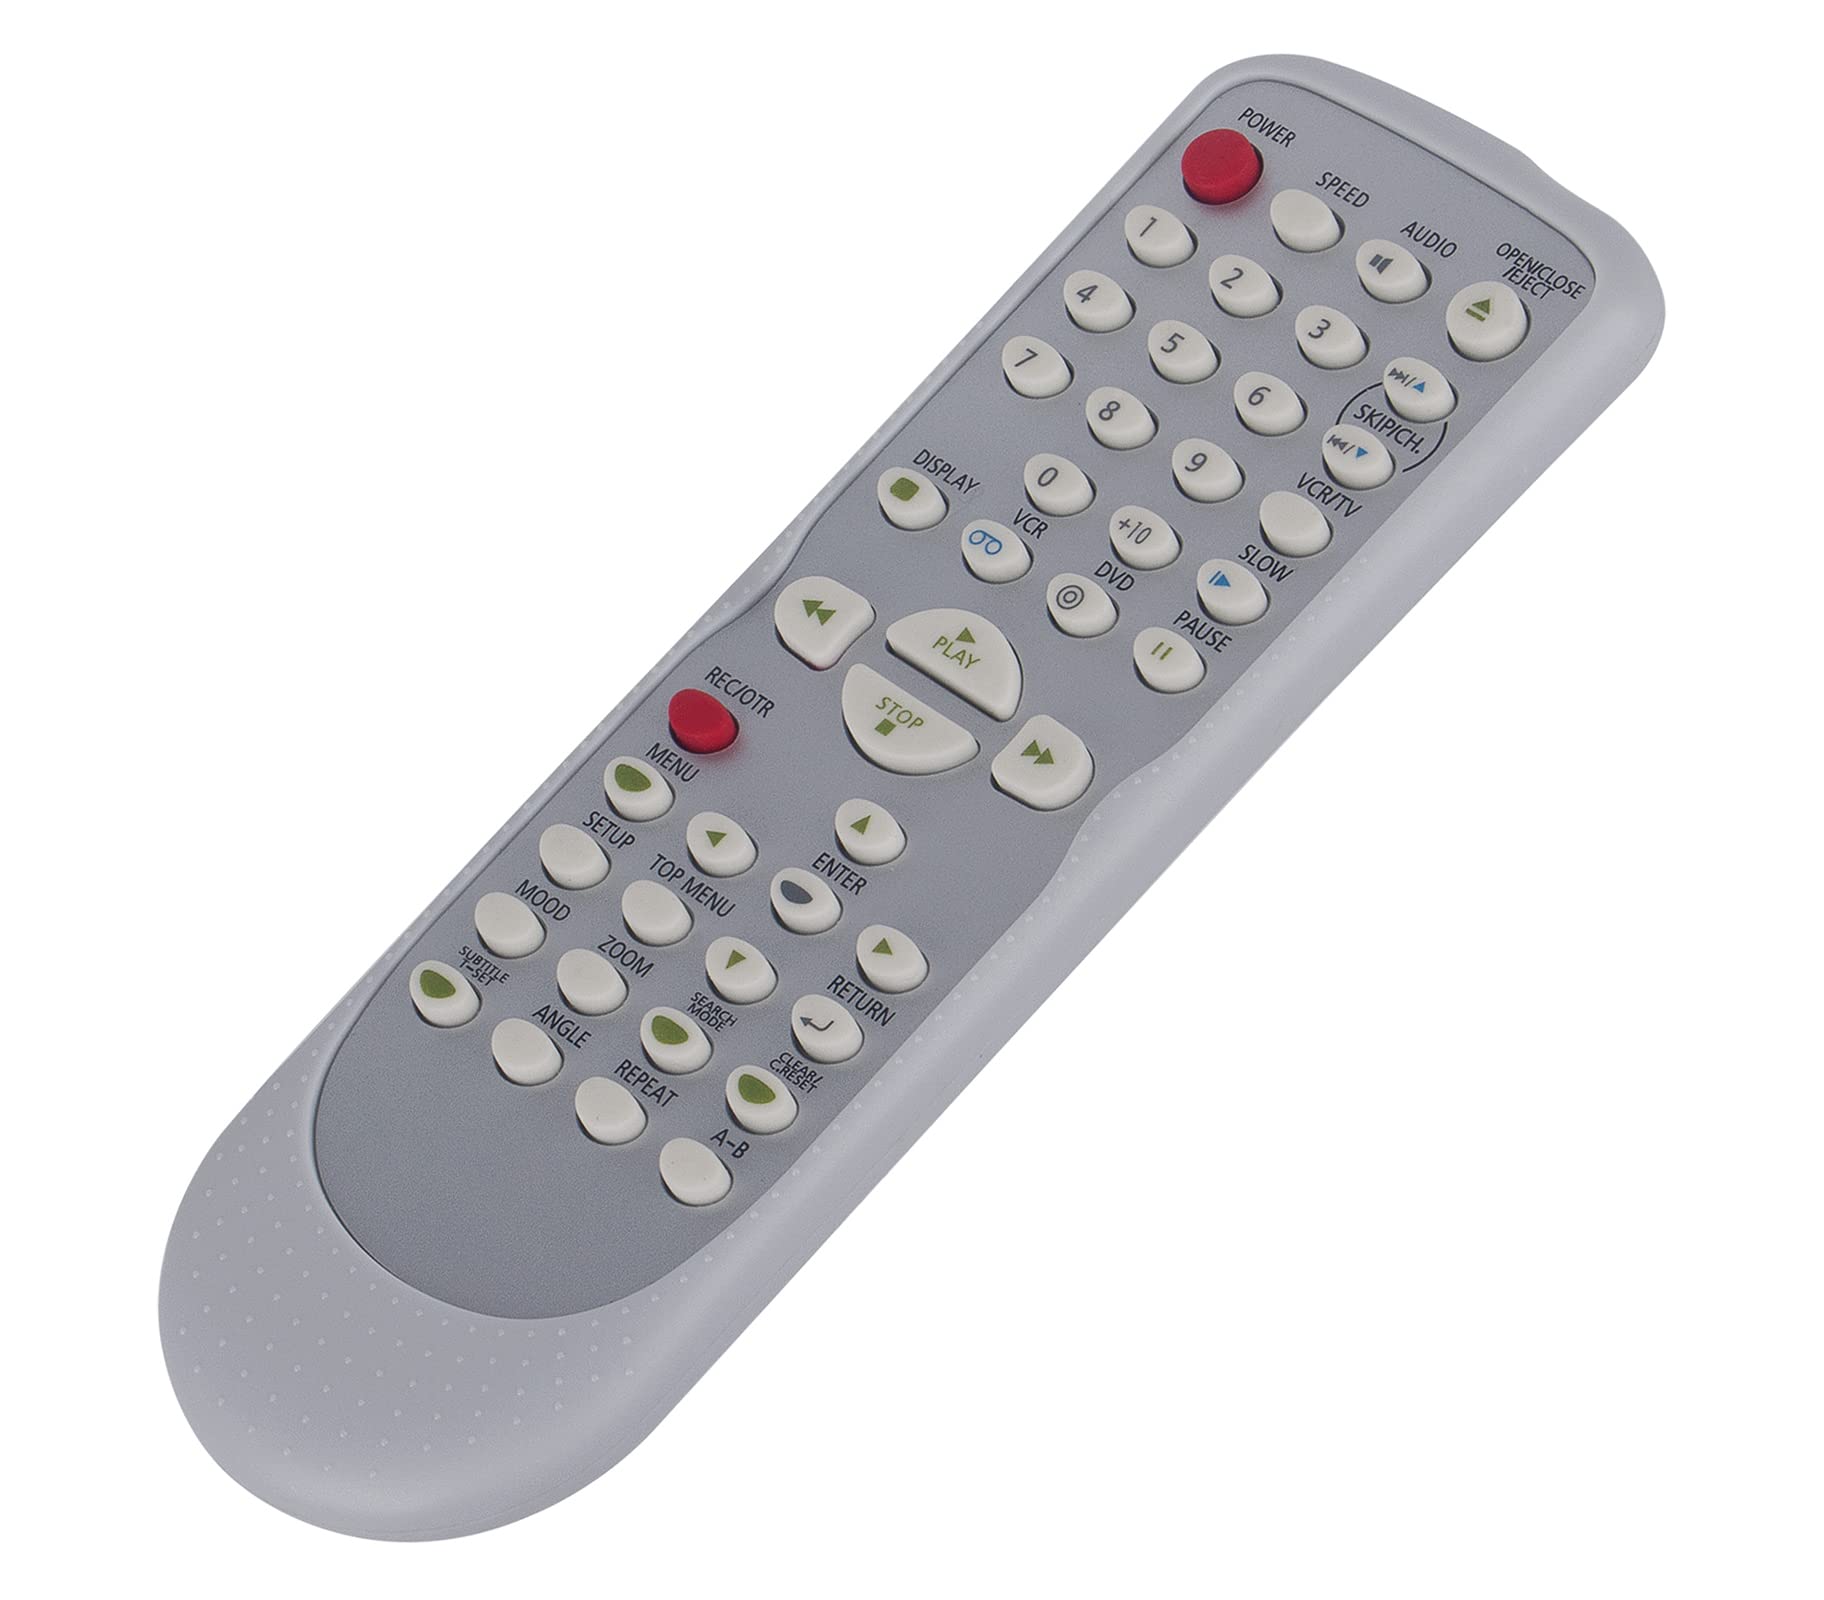 NB177 New Replacement Remote Control fit for SYLVANIA Emerson Funai DVD VCR DVC841G EDVC860F DVC840F DVC840G